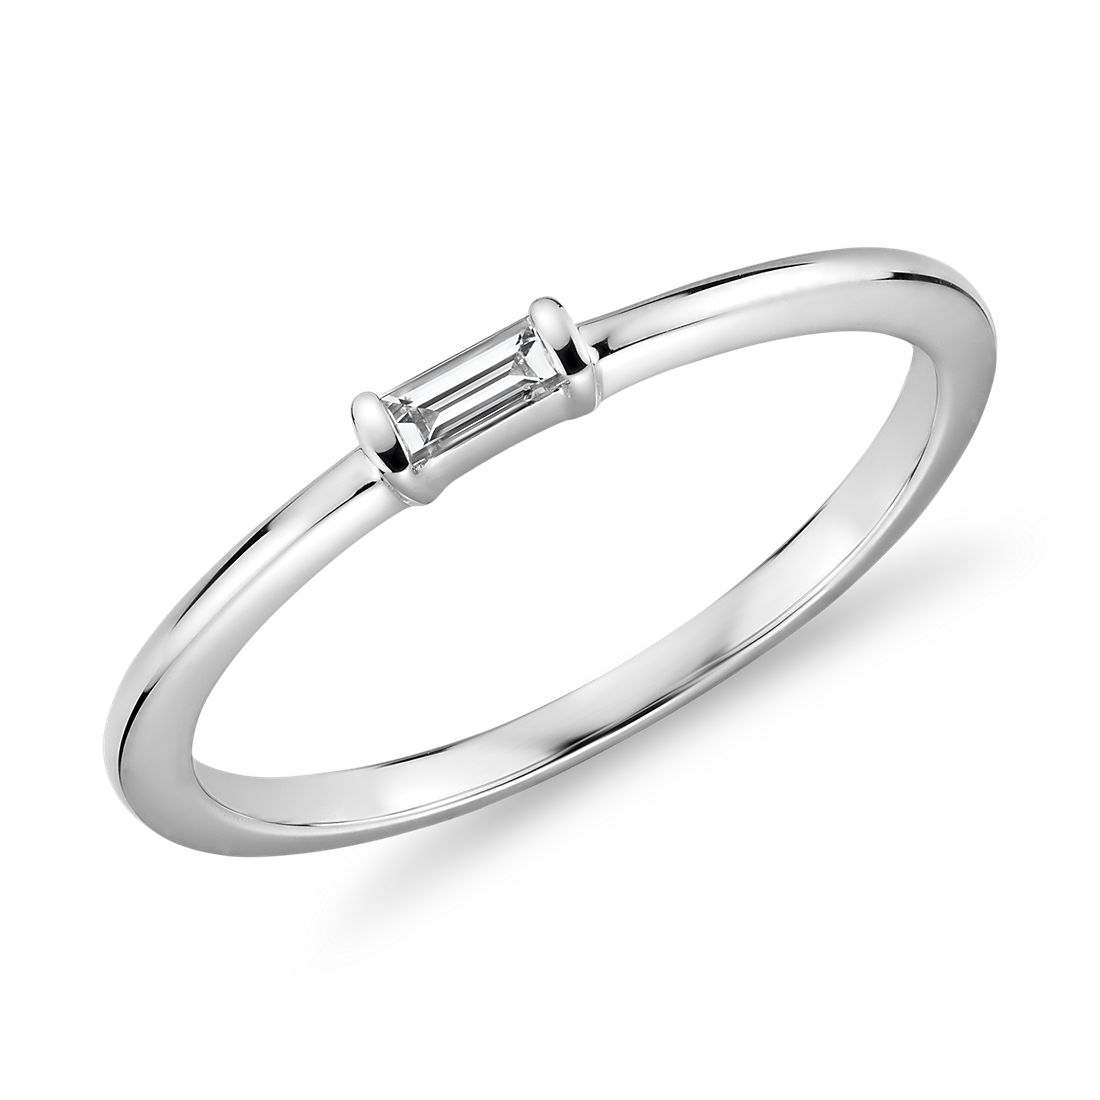 Mini Baguette-Cut Diamond Fashion Ring in 14k White Gold